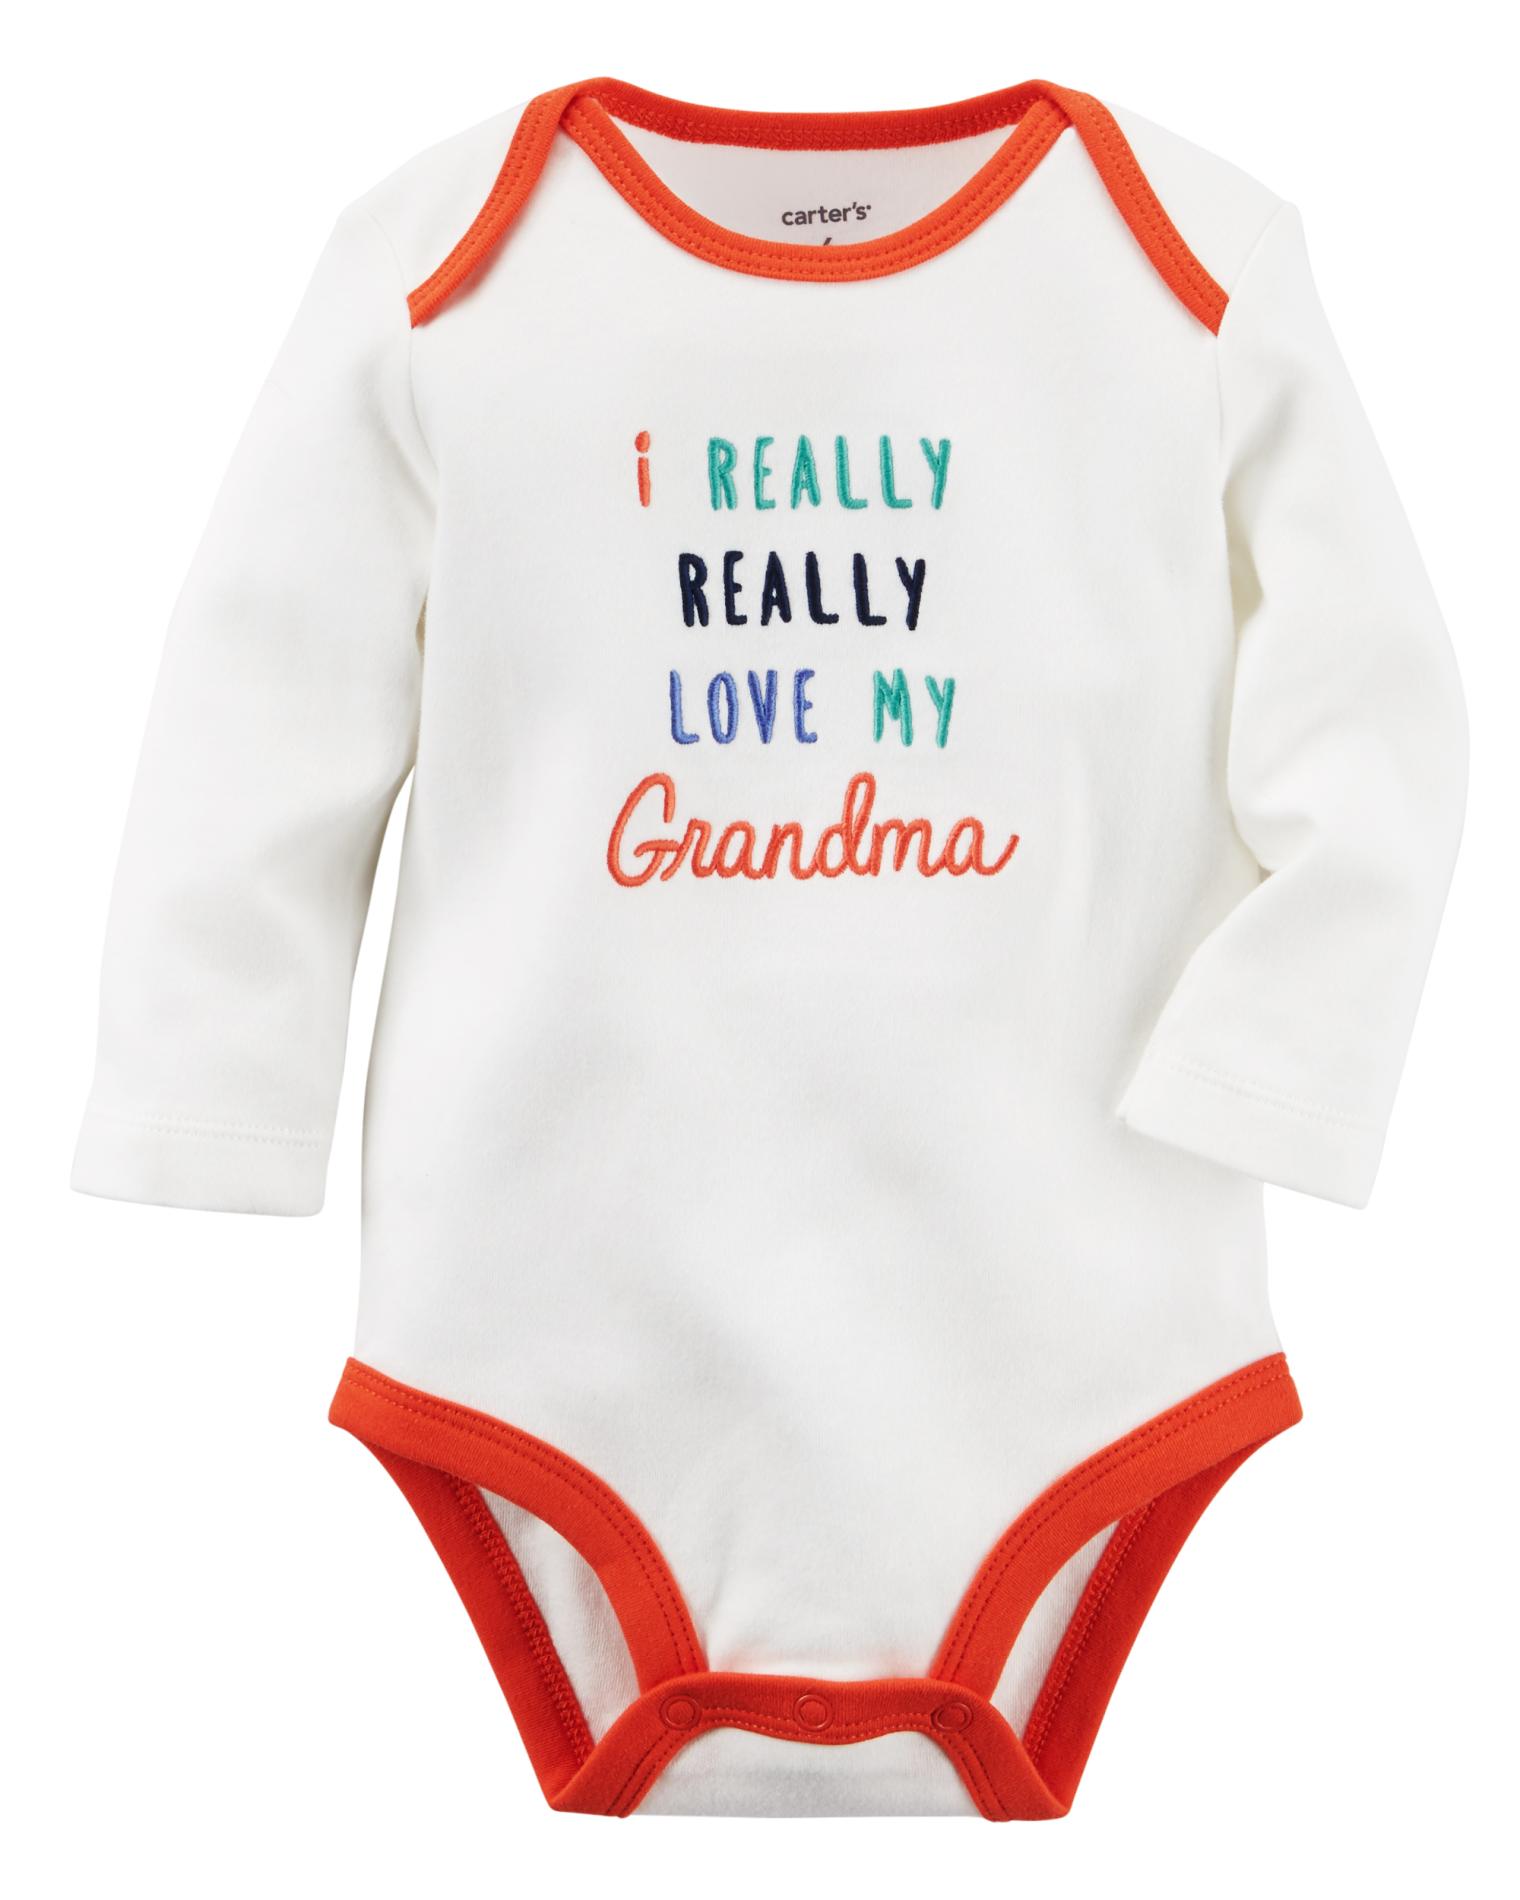 Carter's Newborn & Infant Girls' Long-Sleeve Bodysuit - Love My Grandma